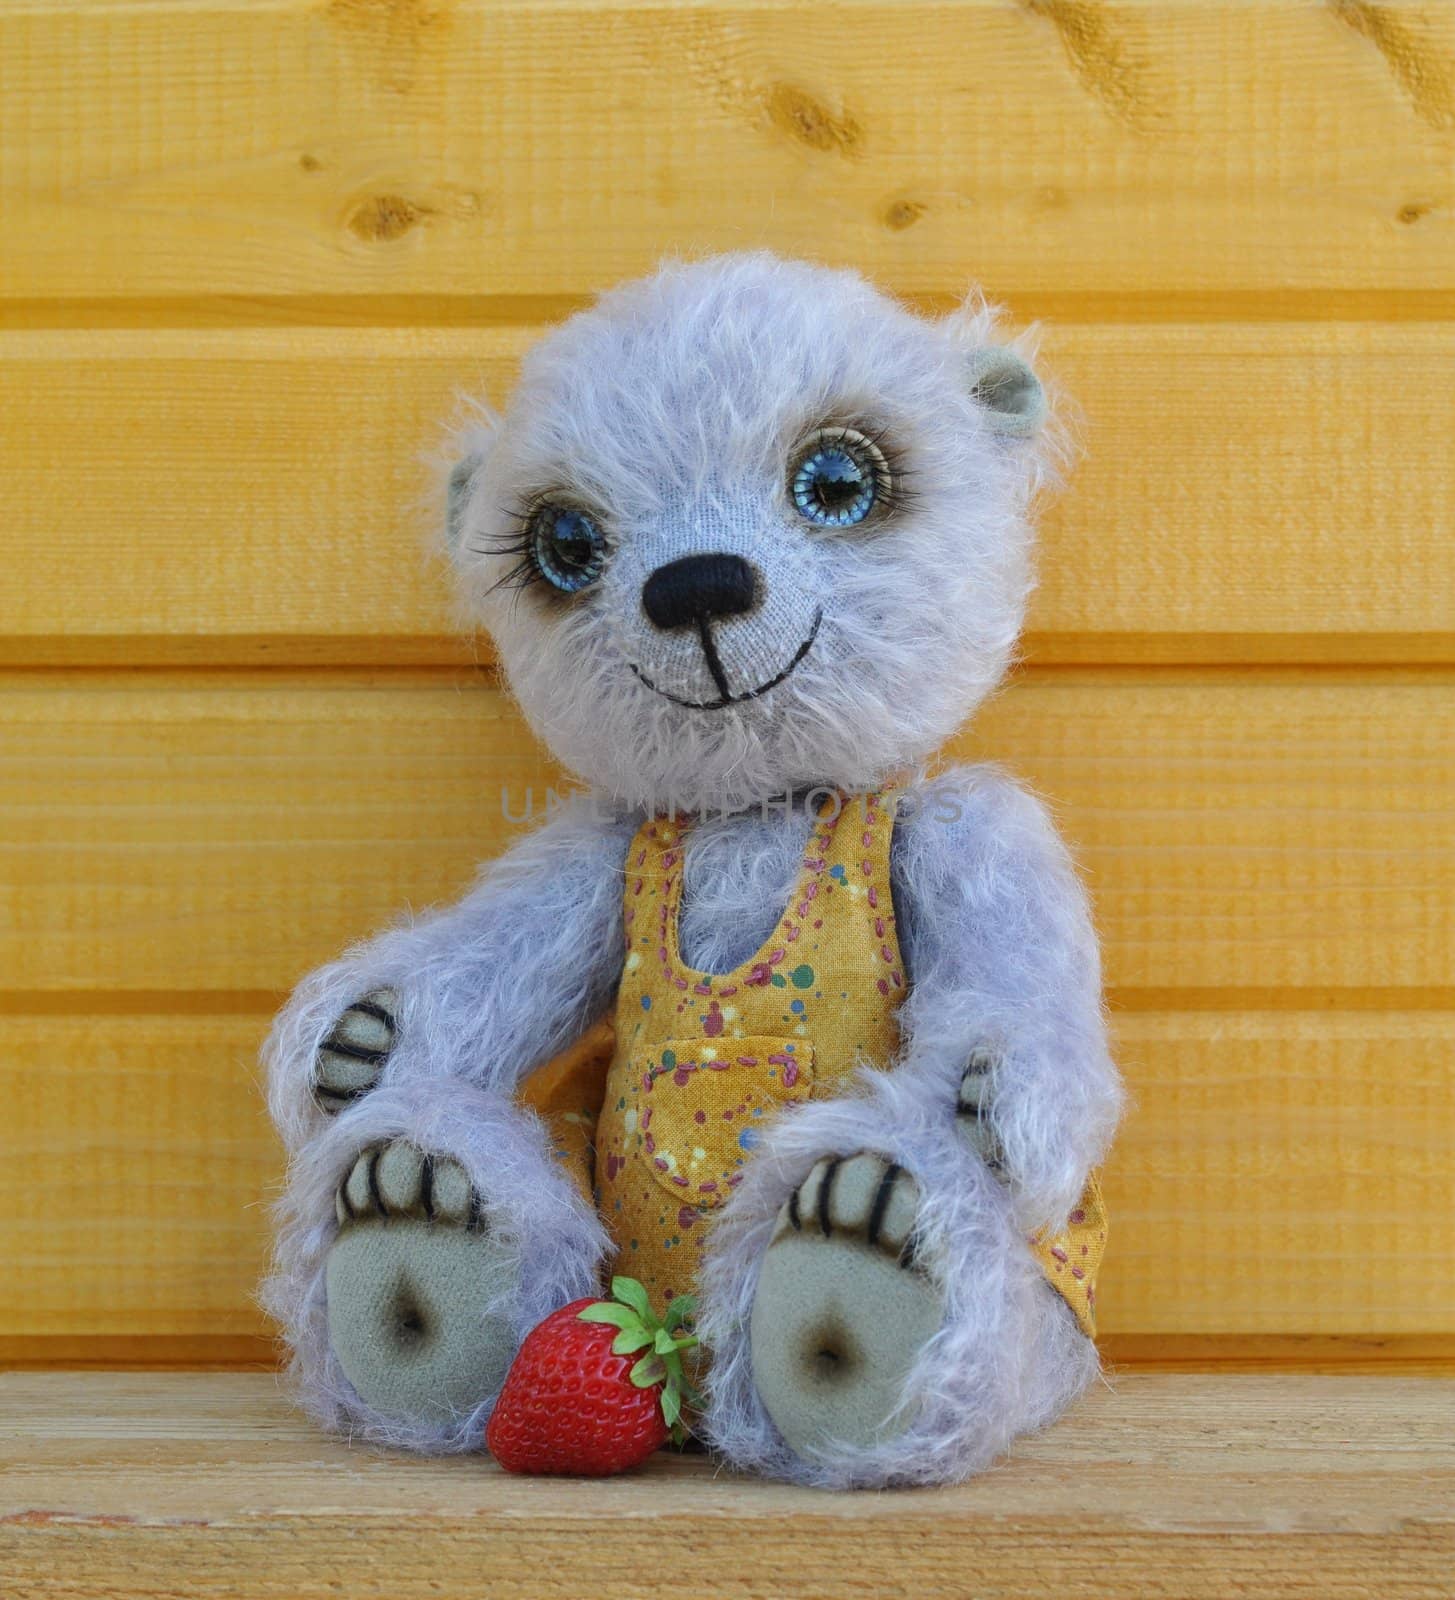 Handmade, the sewed toy: teddy-bear Chupa with strawberry